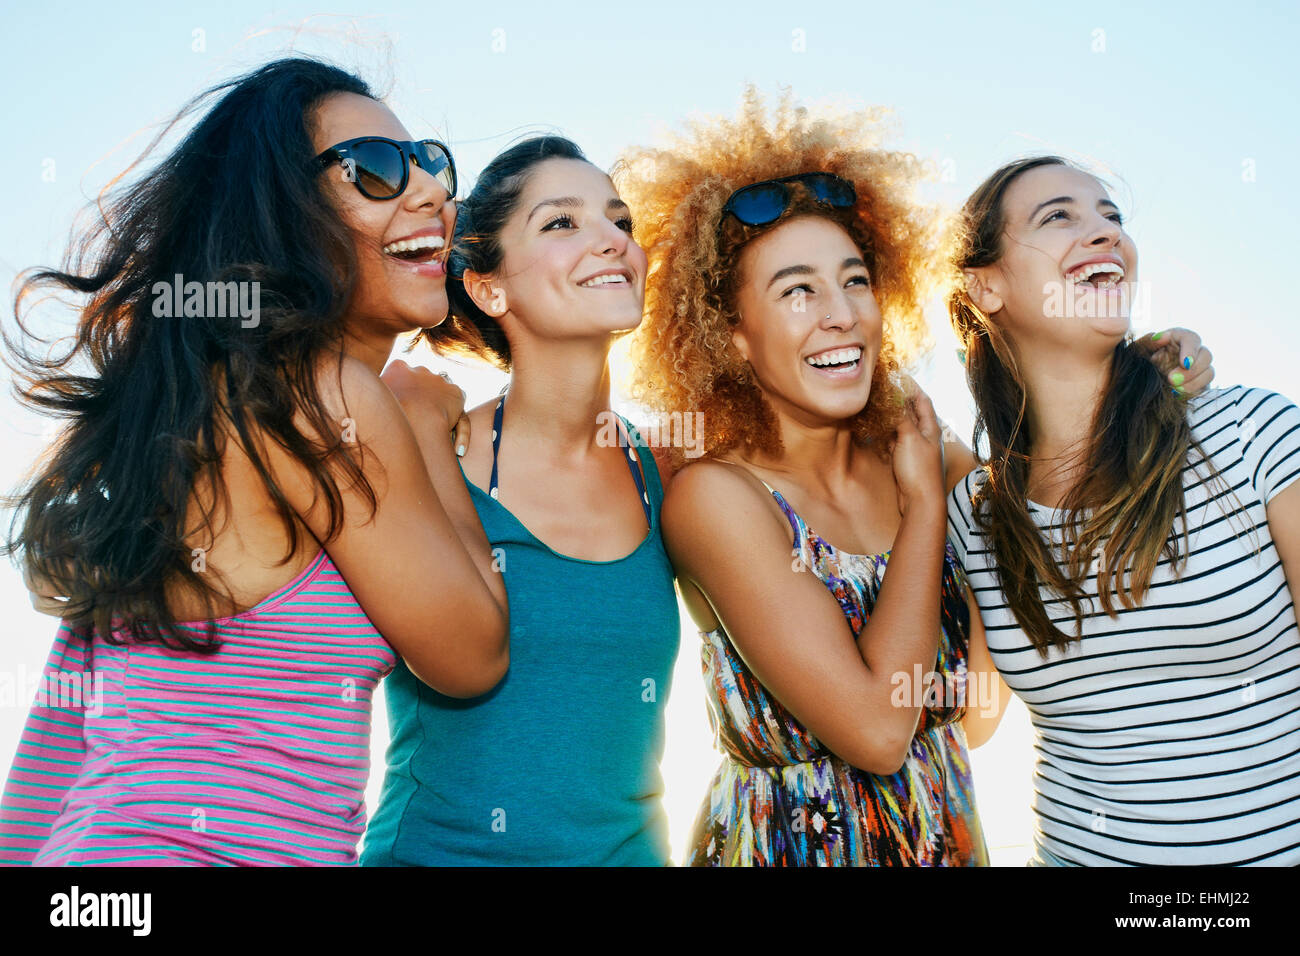 Smiling women posing outdoors Stock Photo